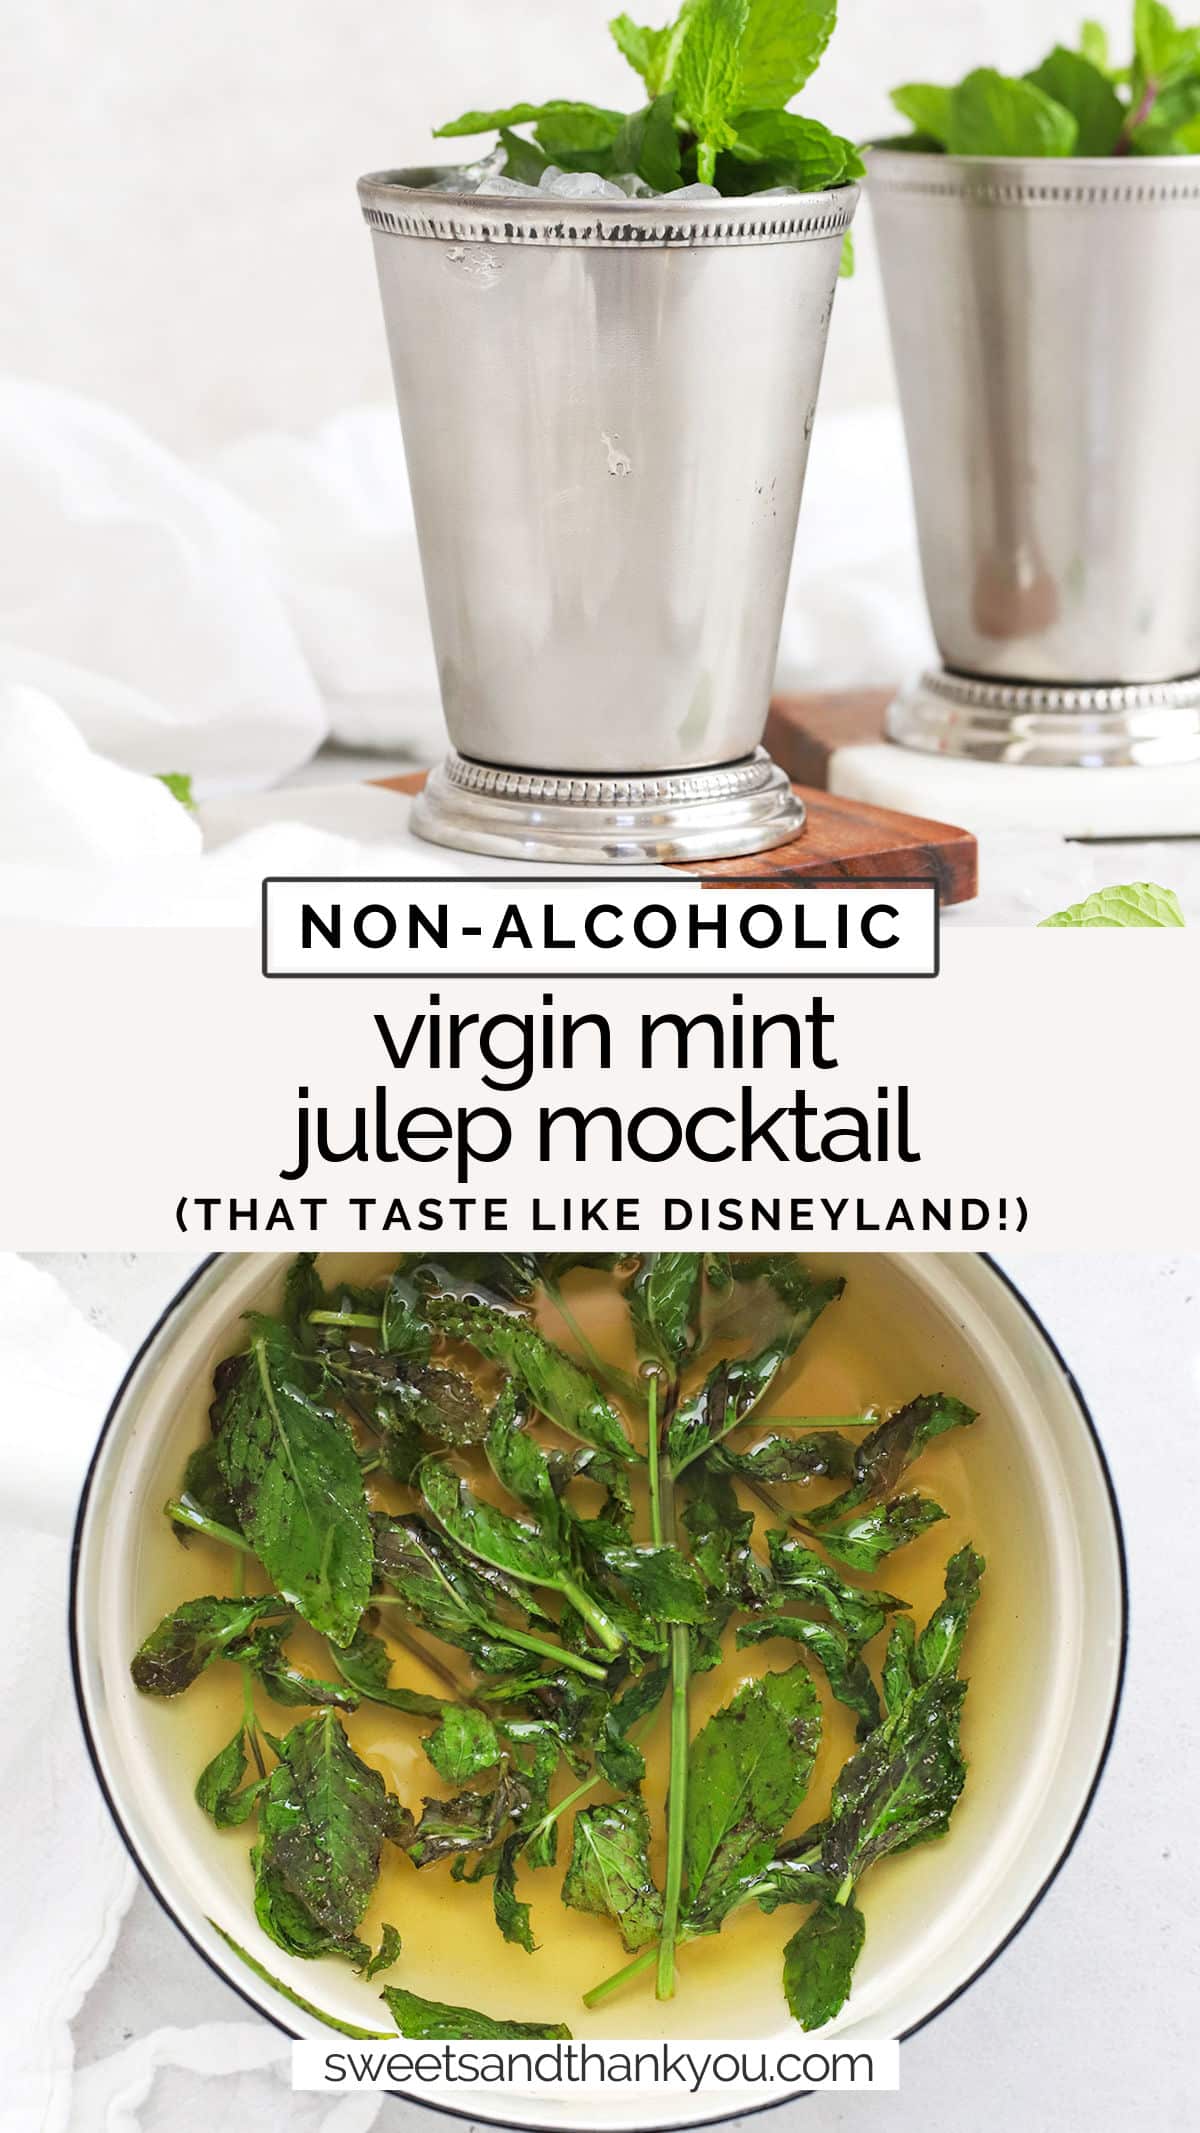 Craving a virgin mint julep for Derby day? We've got you covered with our easy Disneyland mint julep mocktail recipe! / disneyland copycat mint julep / disneyland mint julep recipe / virgin mint julep recipe / mint julep mocktail recipe / non-alcoholic mint julep recipe / kid friendly mint julep / summer mocktail / mint mocktail / 